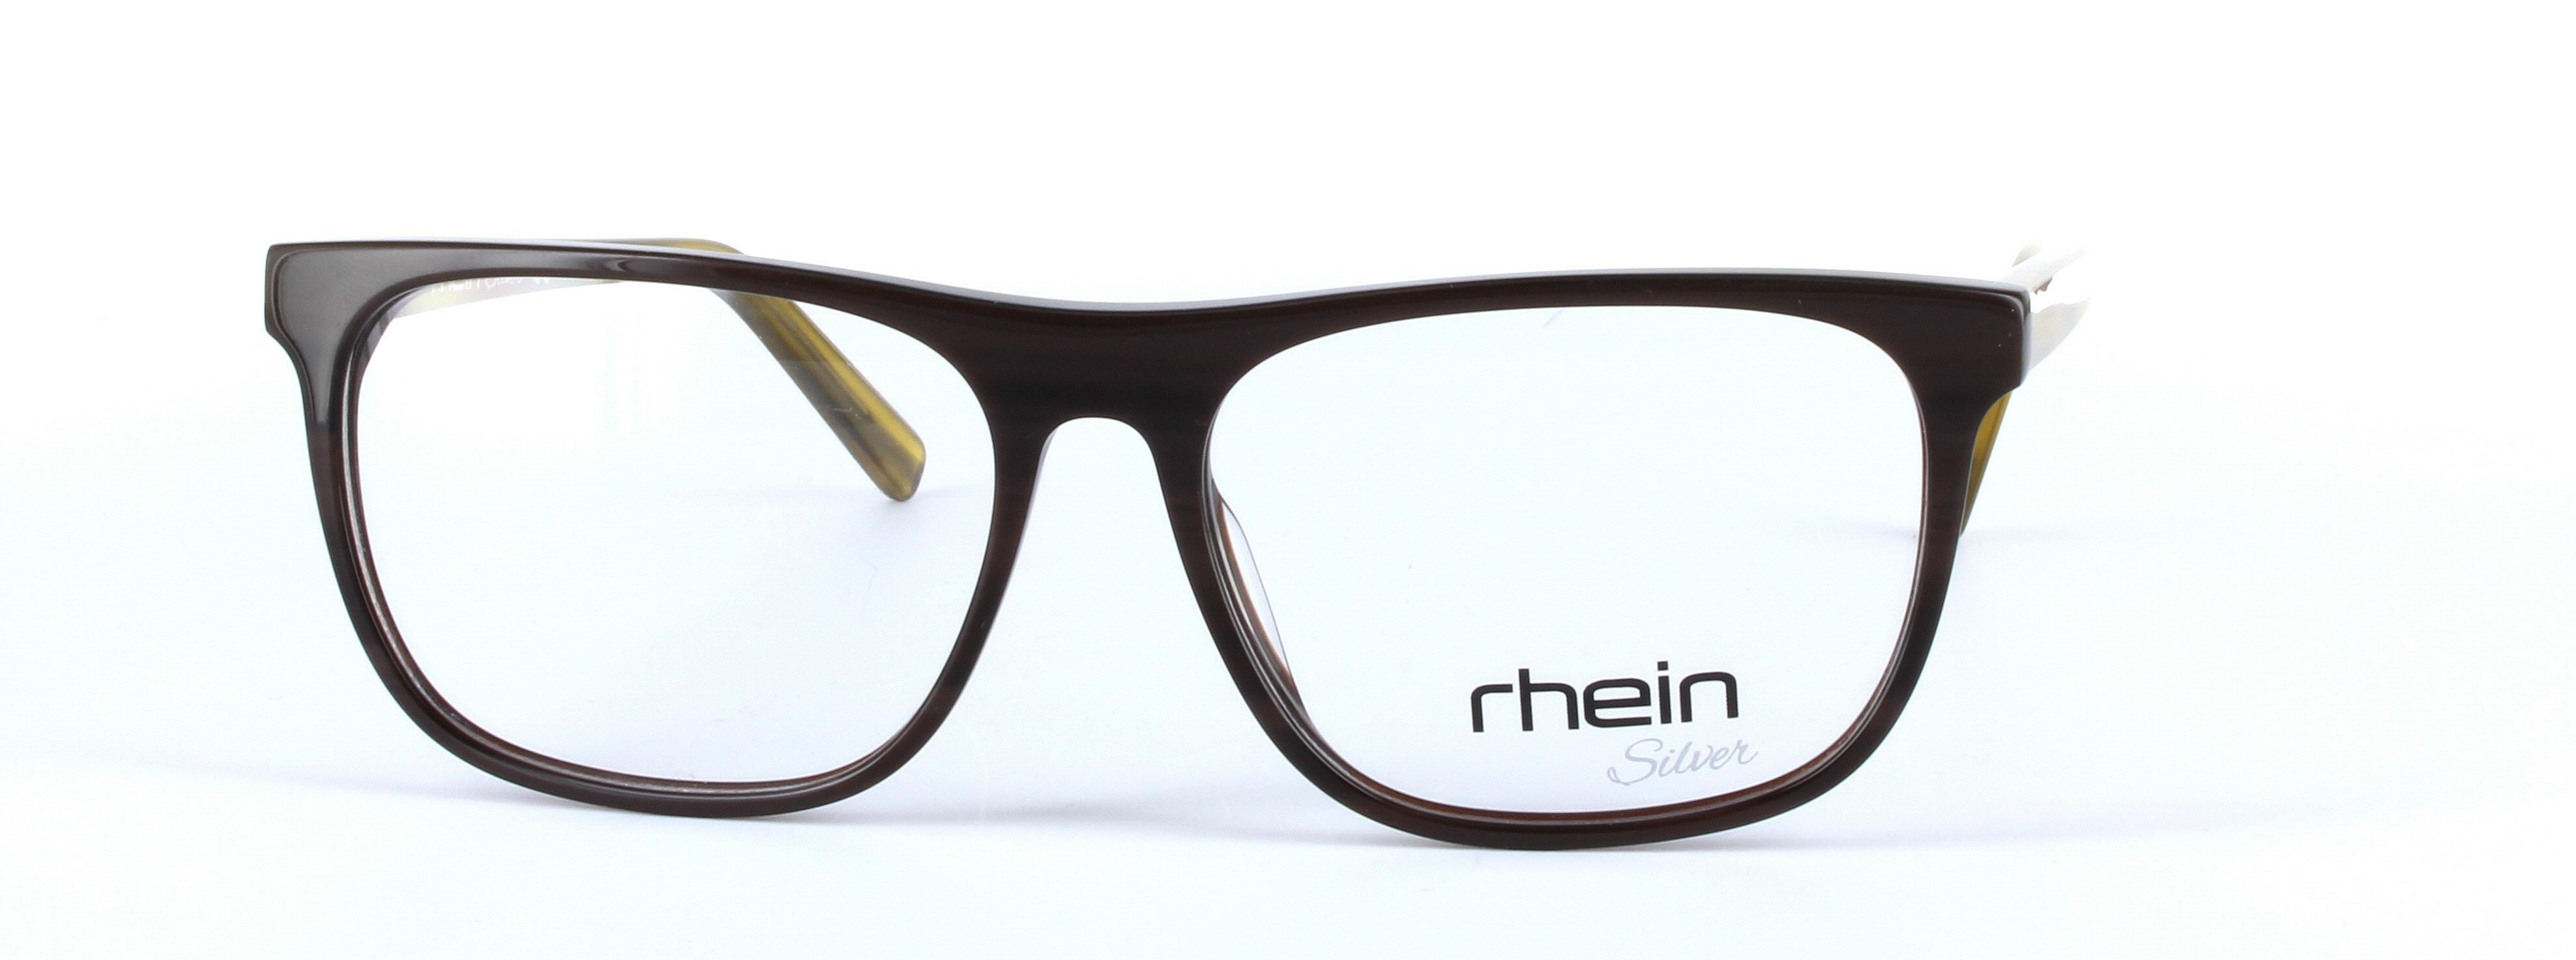 Cian Black and Green Full Rim Rectangular Plastic Glasses - Image View 5